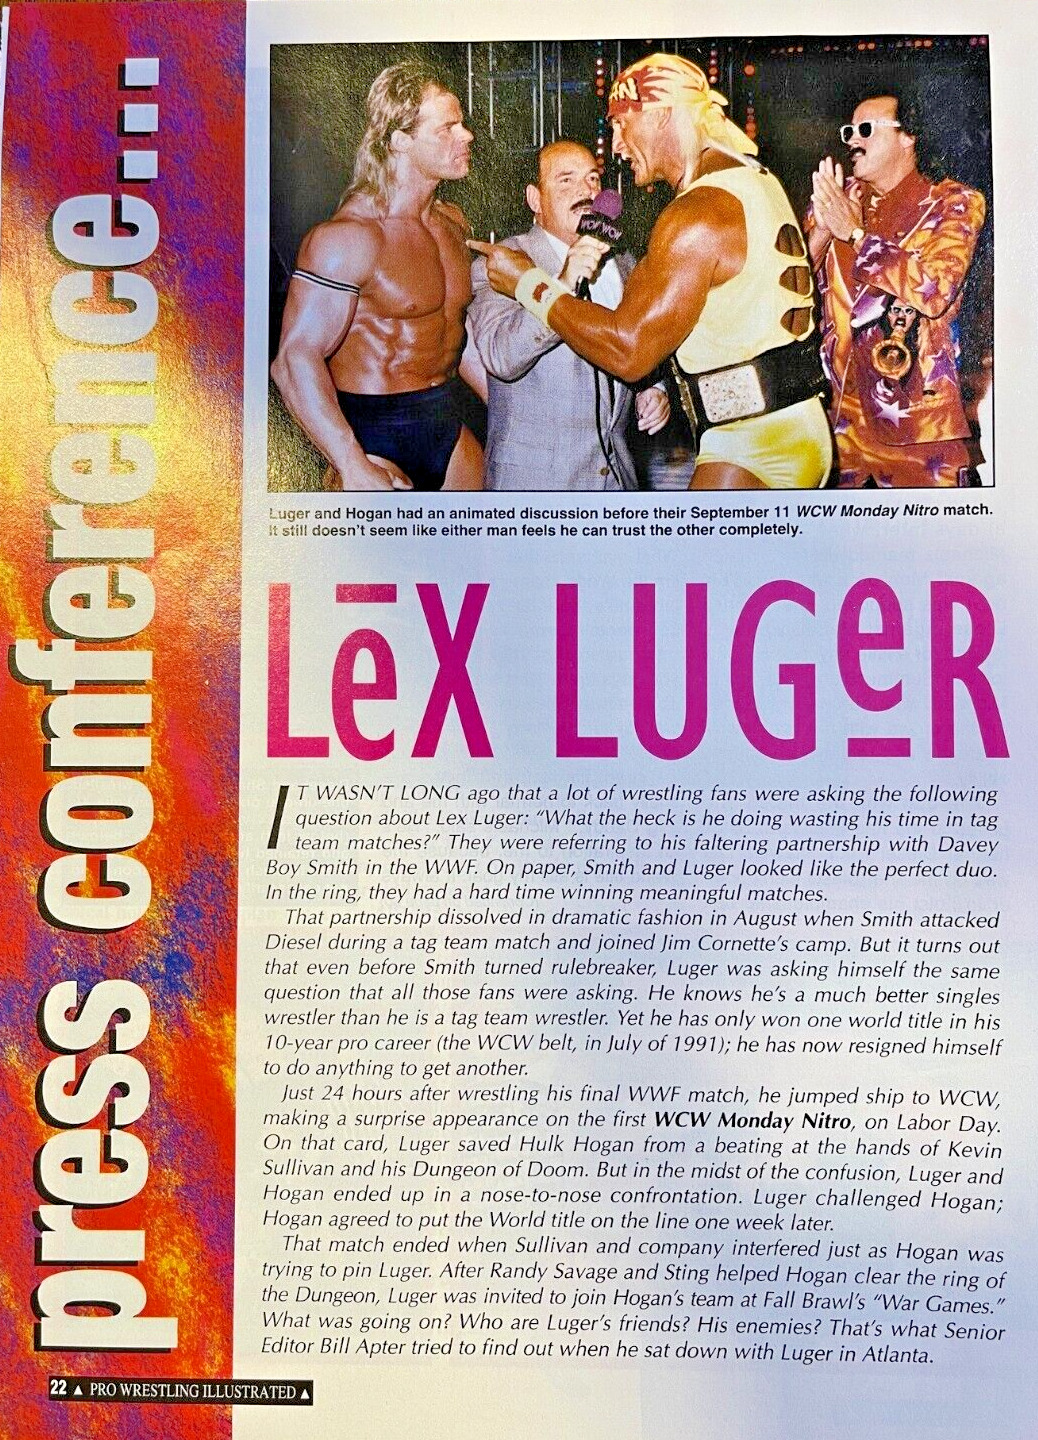 1996 Wrestler Lex Luger